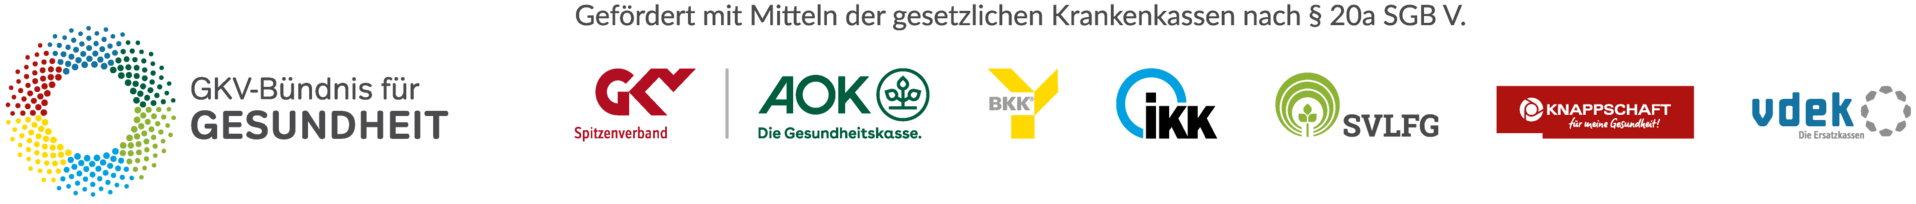 Partner-Logos GKV-Bündnis für Gesundheit